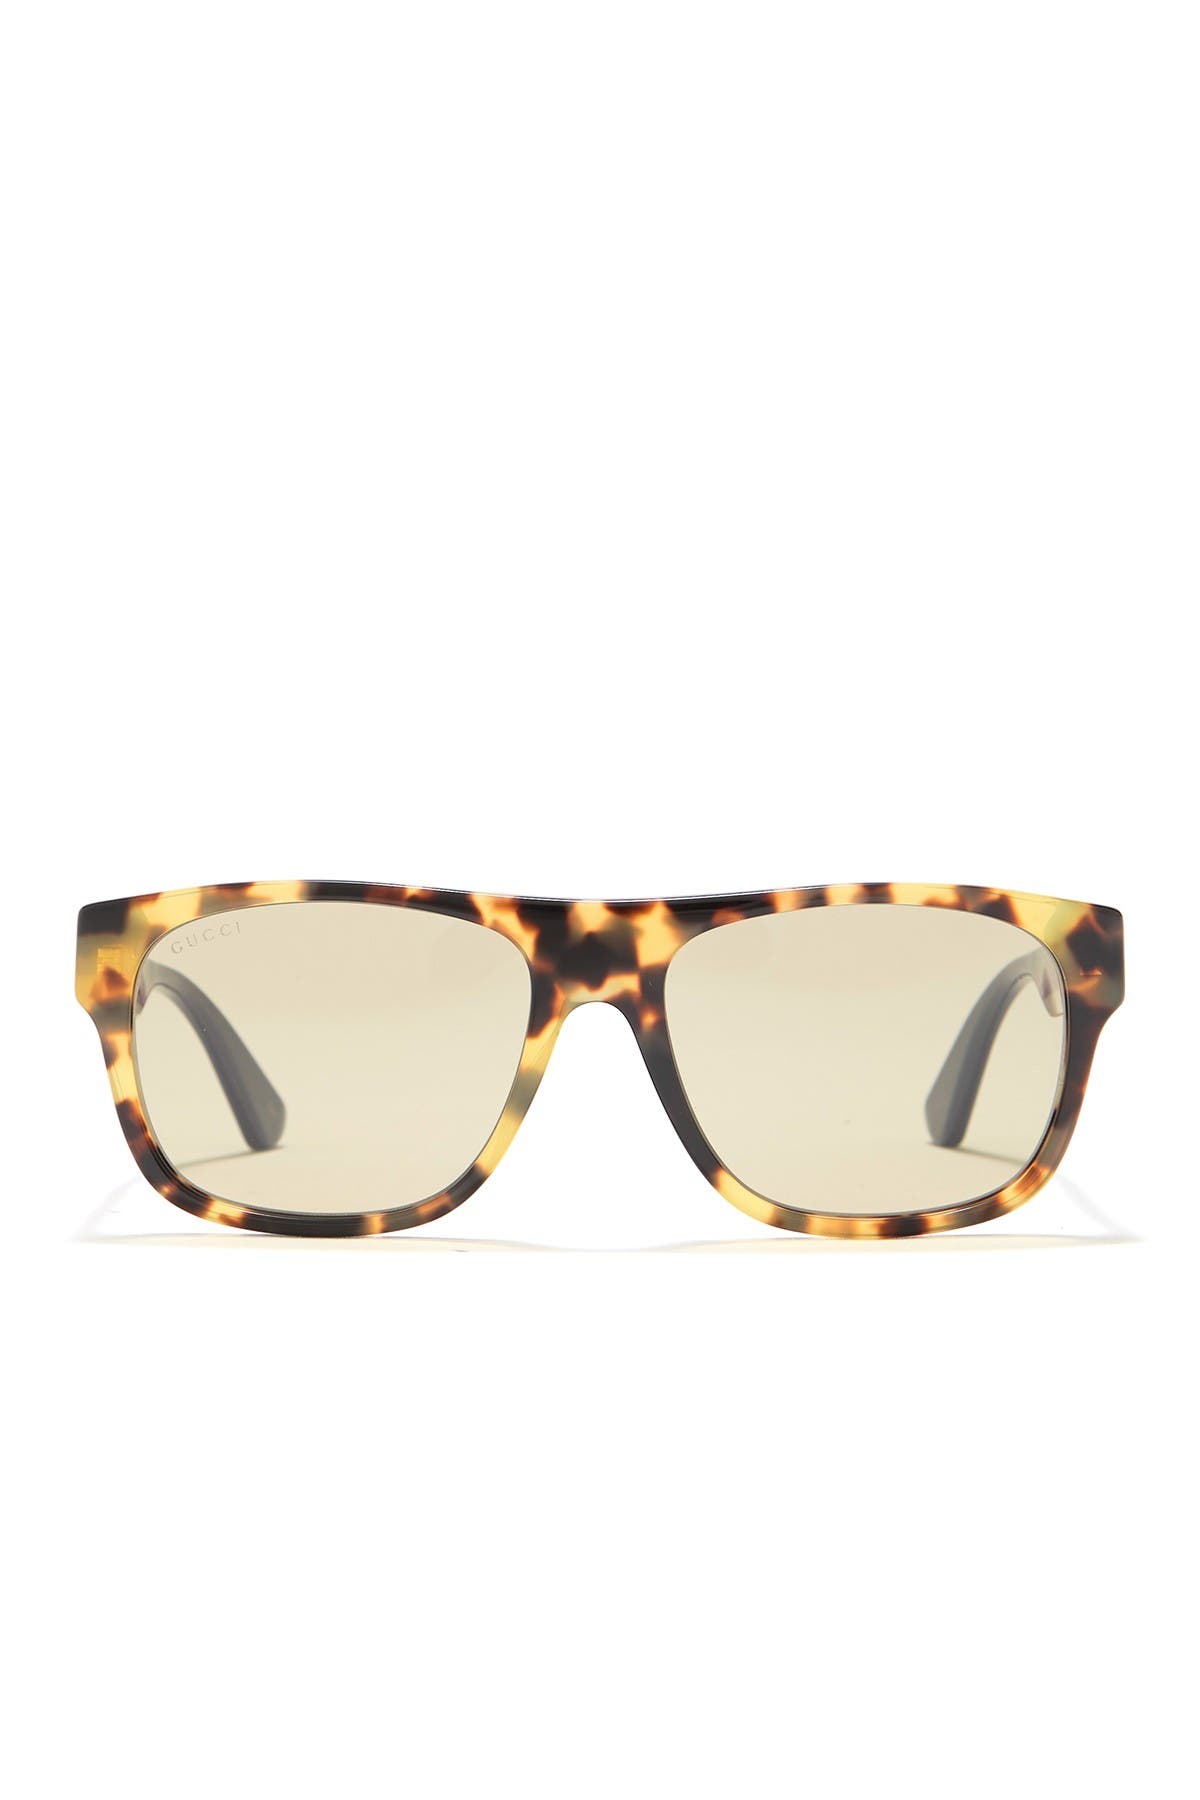 Gucci 56mm Square Sunglasses Nordstrom Rack